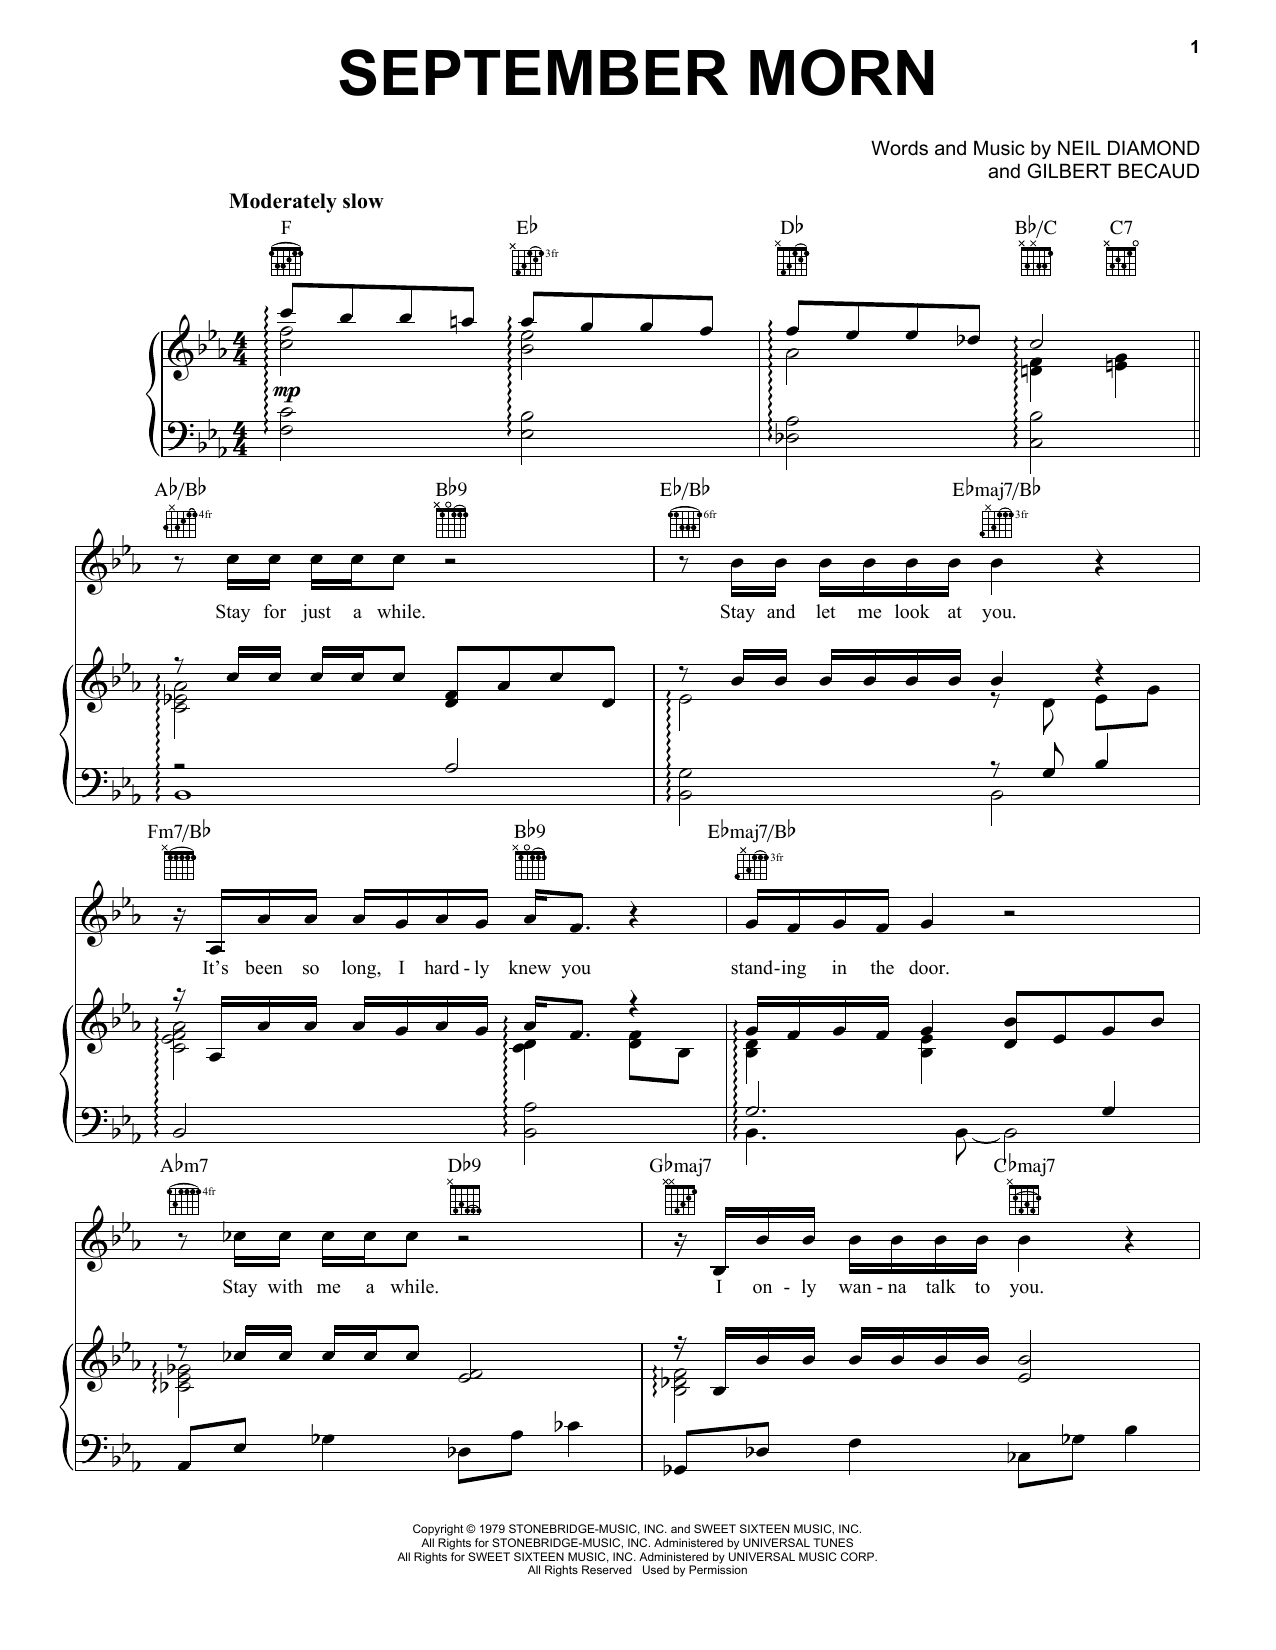 Neil Diamond September Morn Sheet Music Notes & Chords for Melody Line, Lyrics & Chords - Download or Print PDF